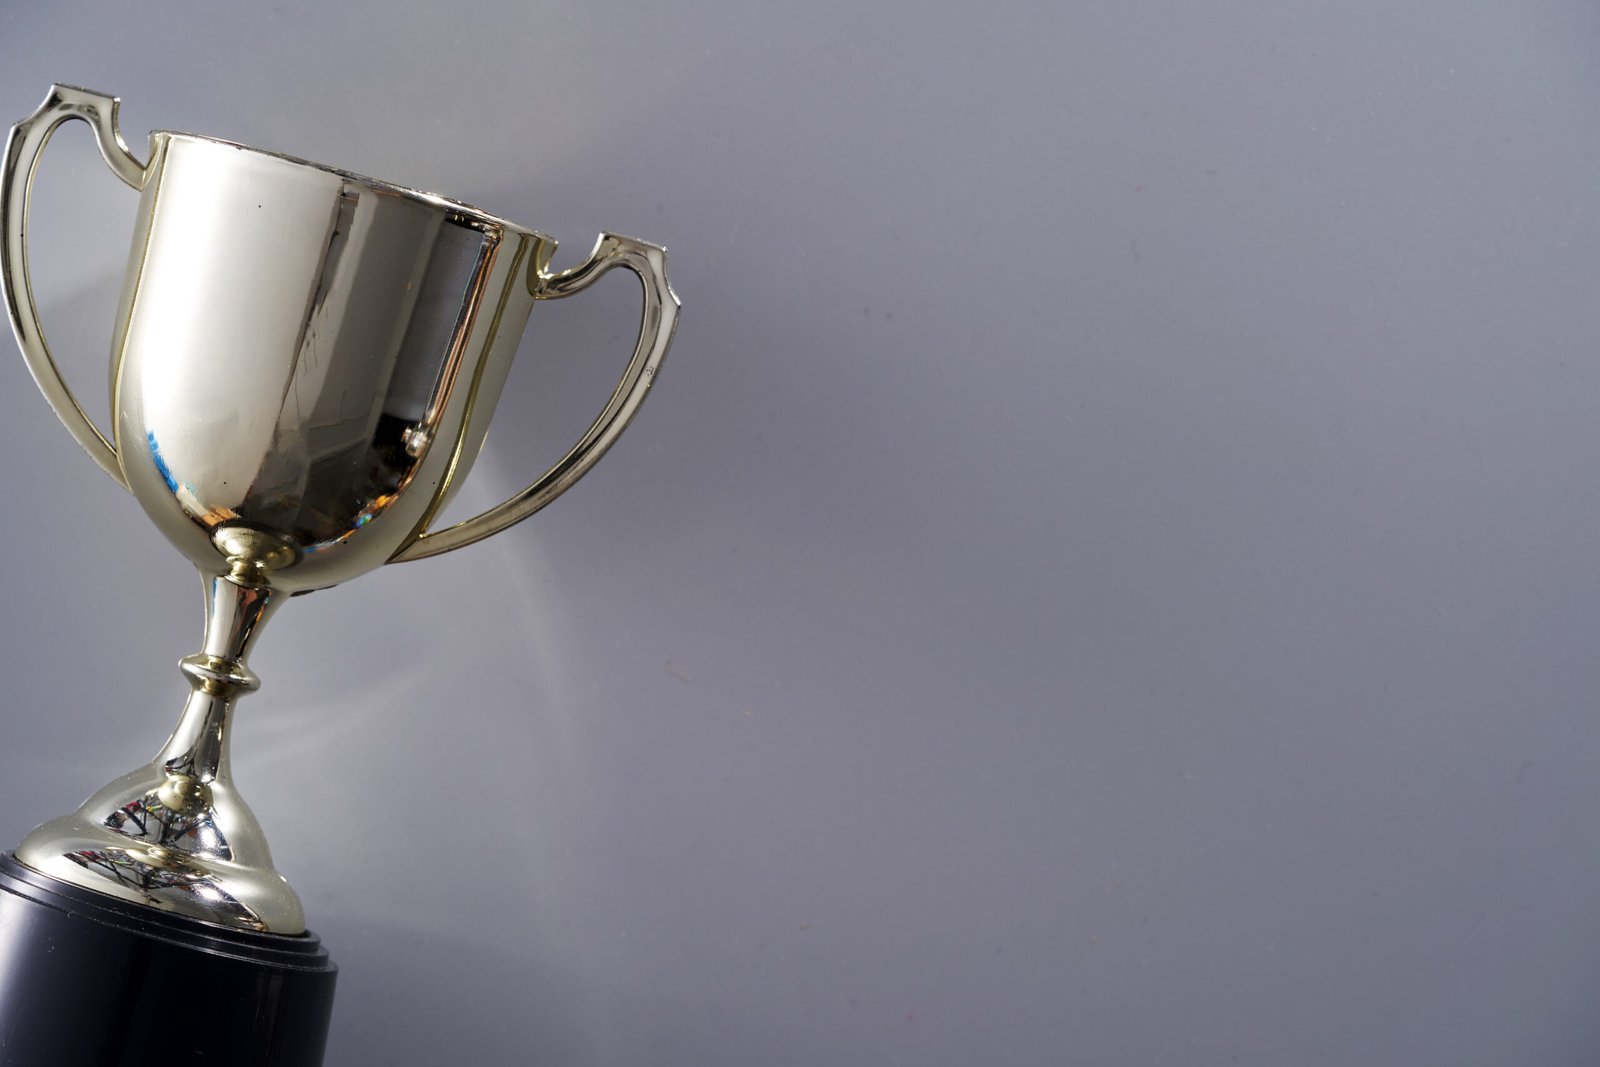 A shining trophy against a grey background.